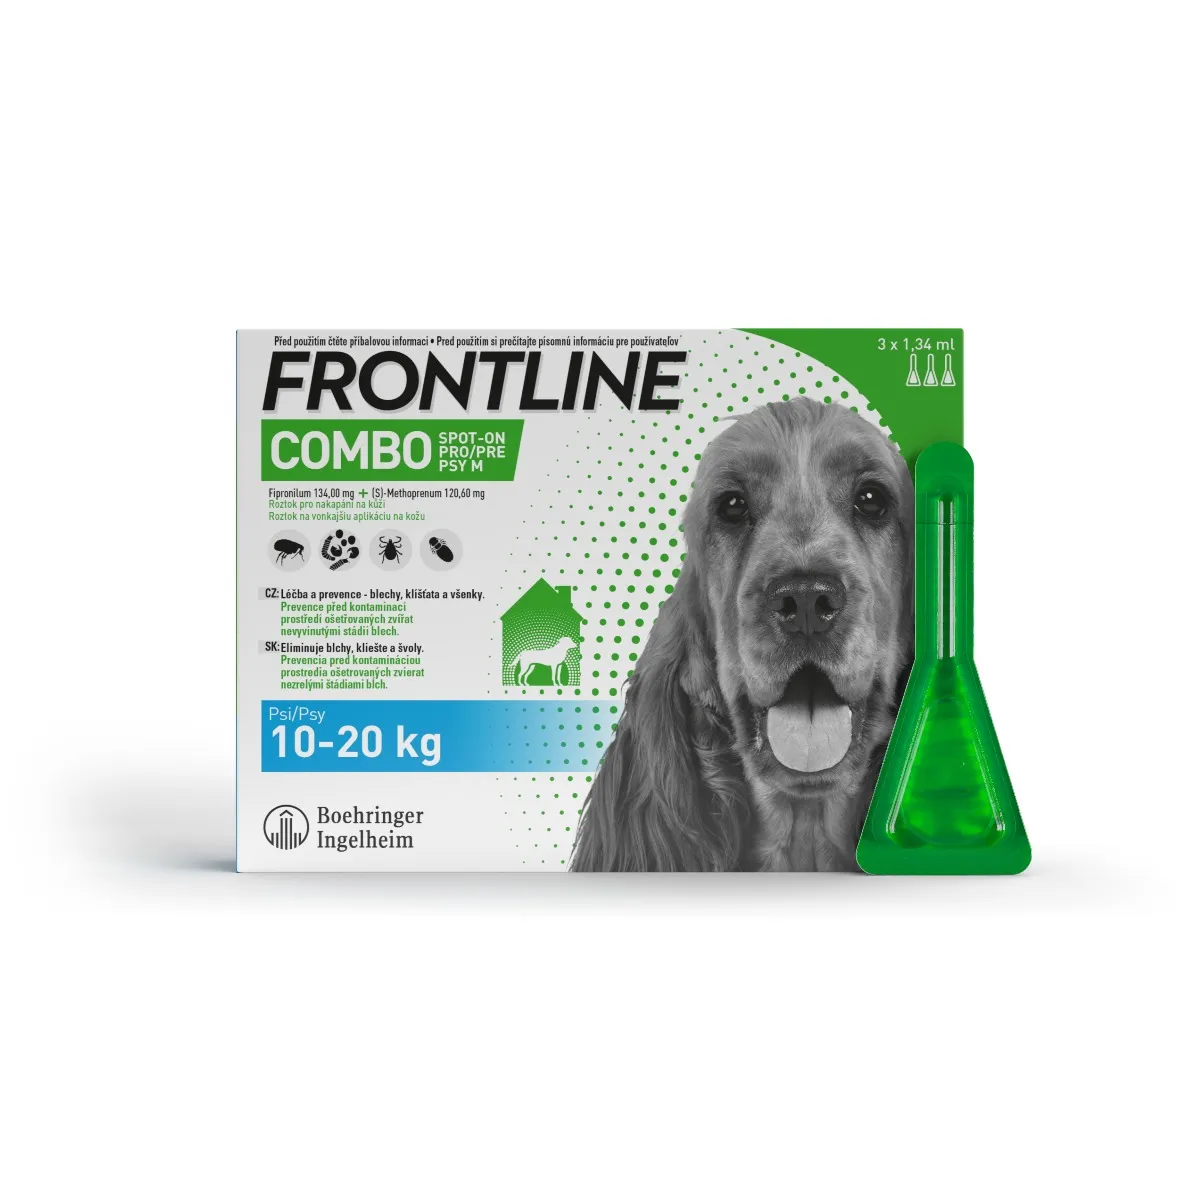 FRONTLINE COMBO spot-on pro DOG M  3 x 1,34 ml 3x1,34 ml, roztok pre psy